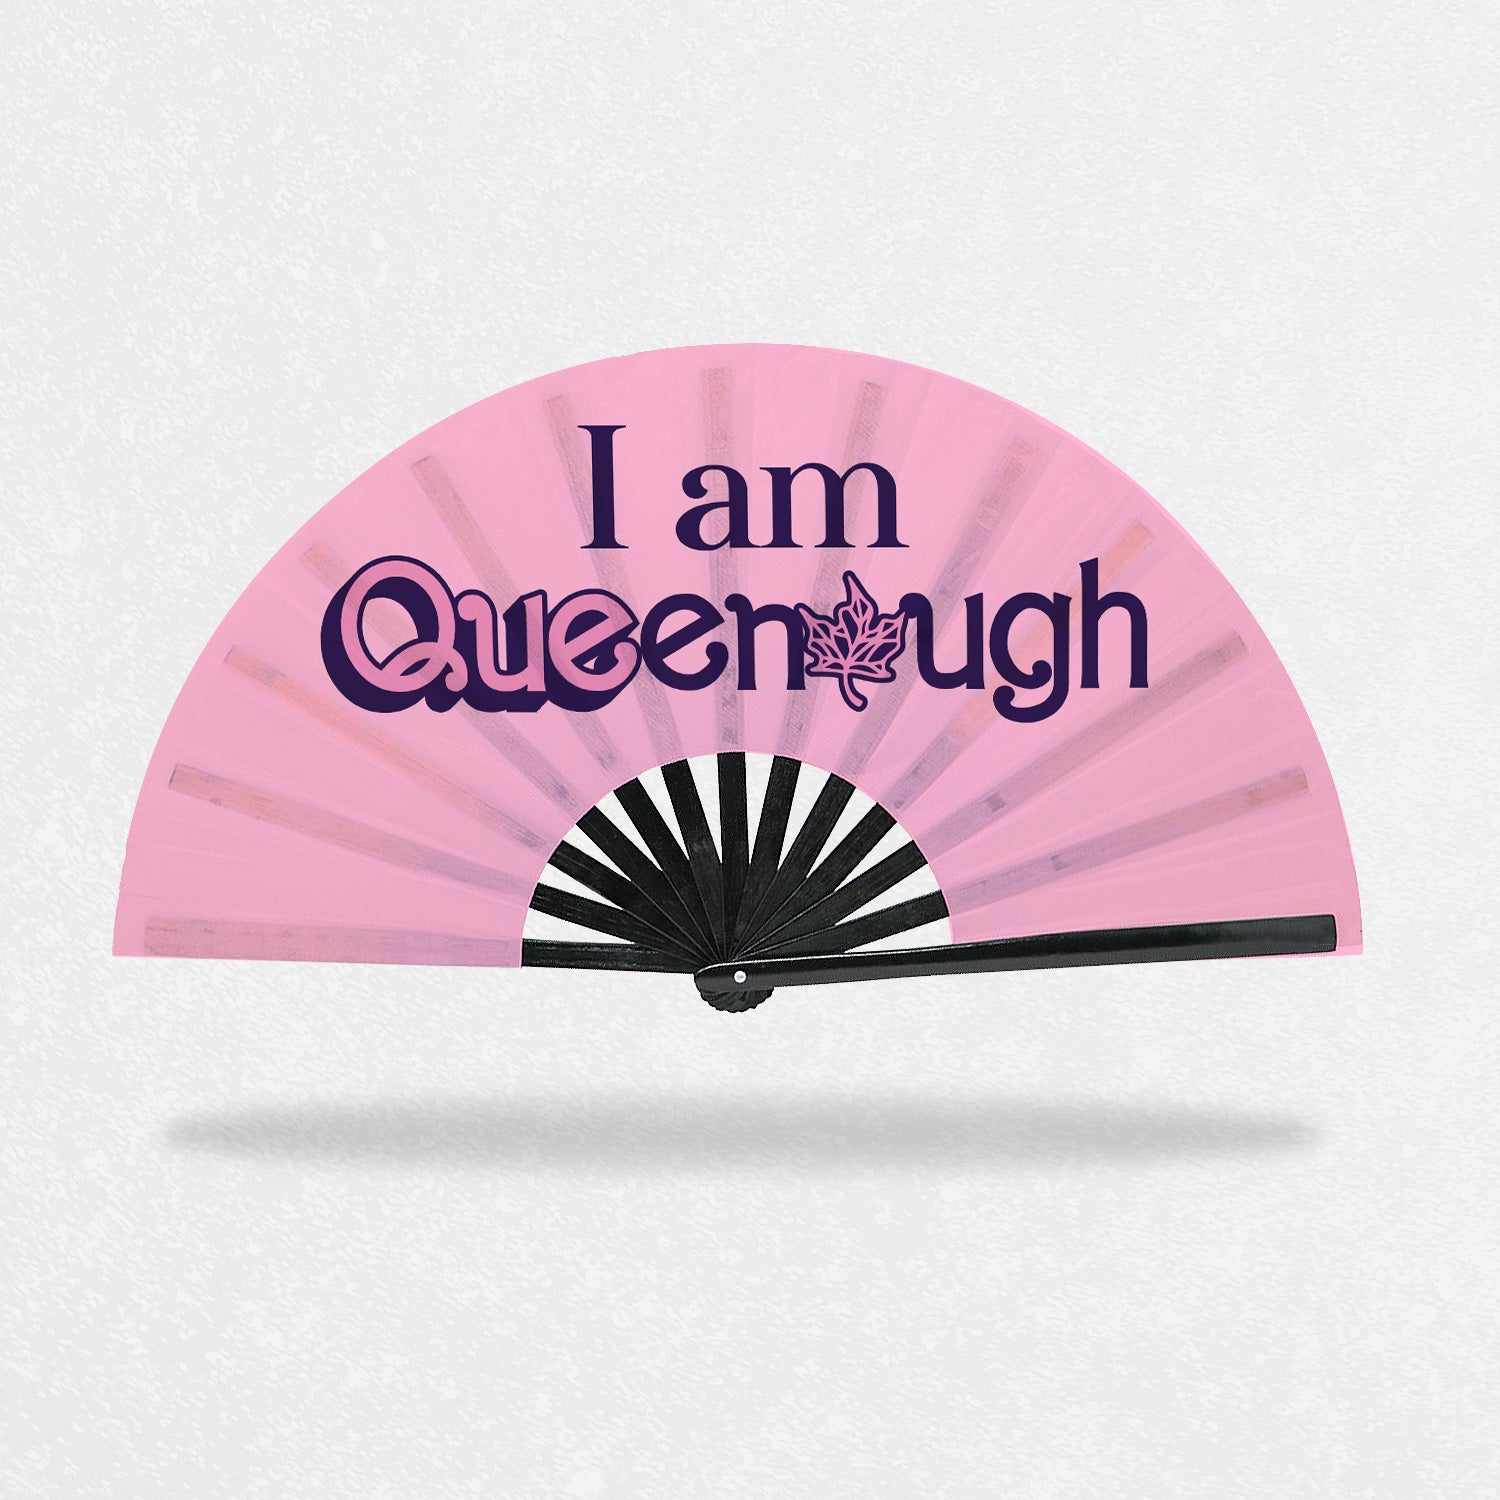 Maple Queef - I am Queenough Clack Fan